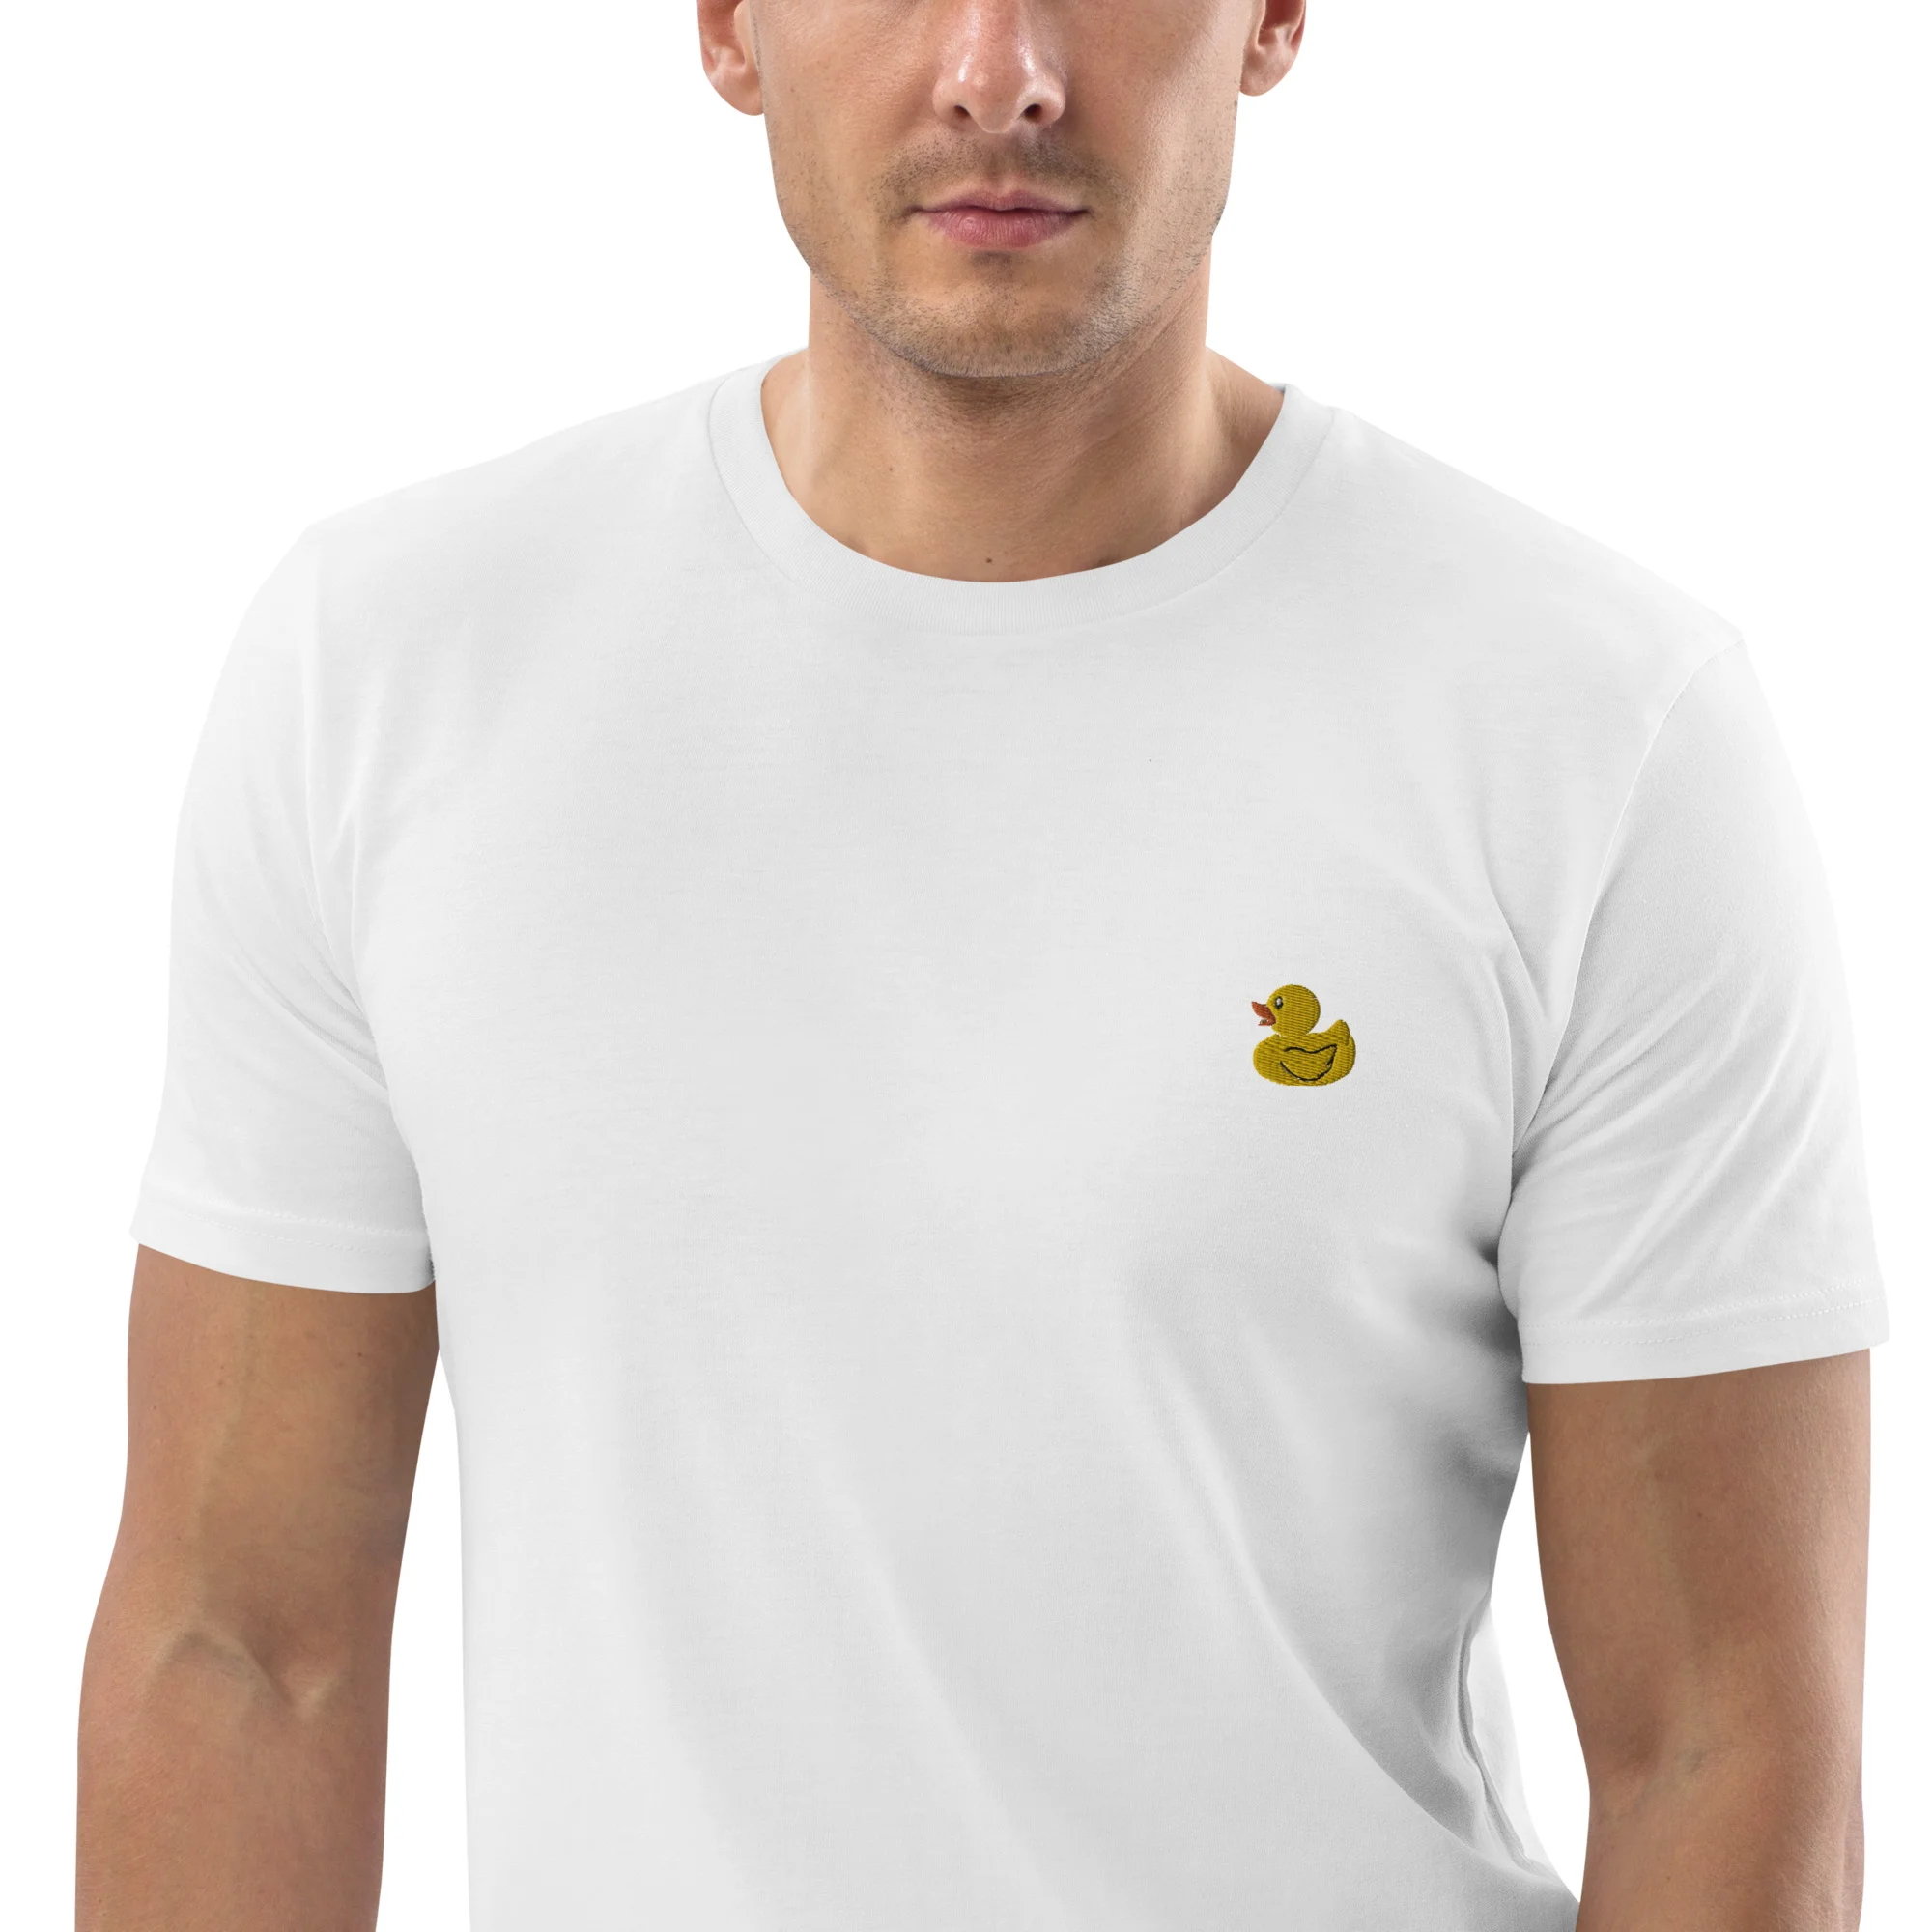 unisex organic cotton t shirt white zoomed in 2 64773edf0c766